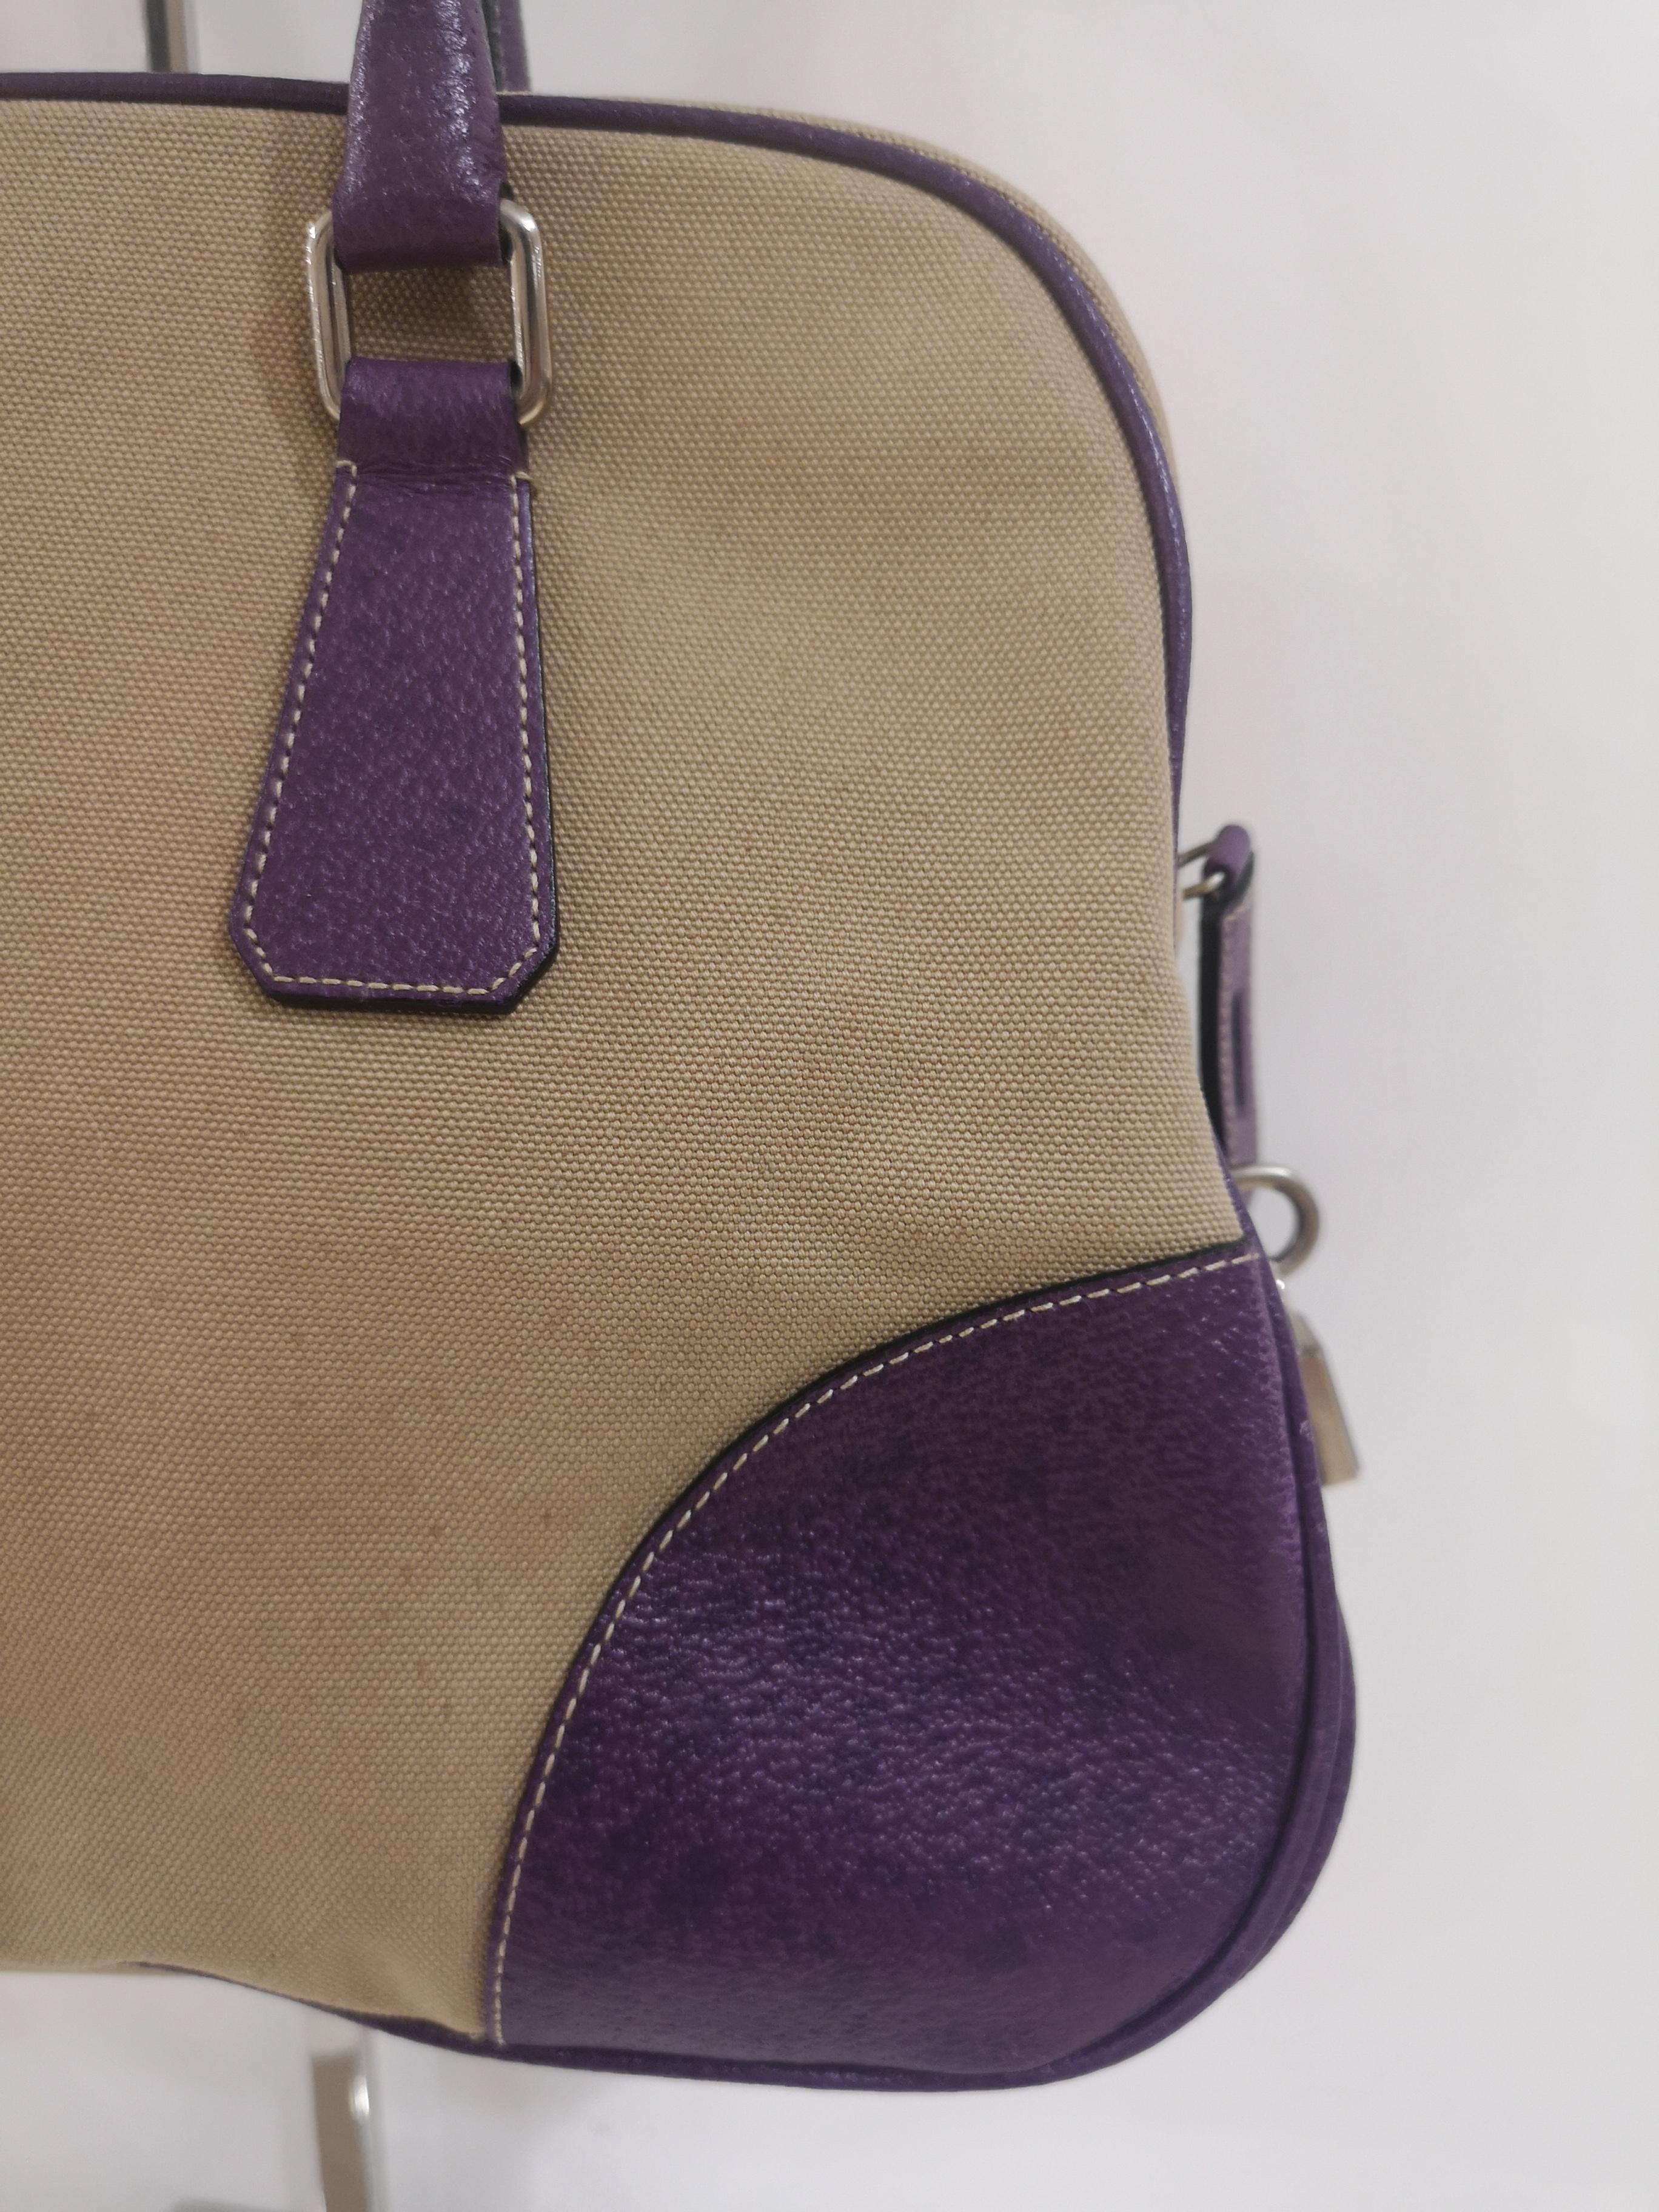 Prada beige purple handle bag / Shoulder bag In Excellent Condition In Capri, IT